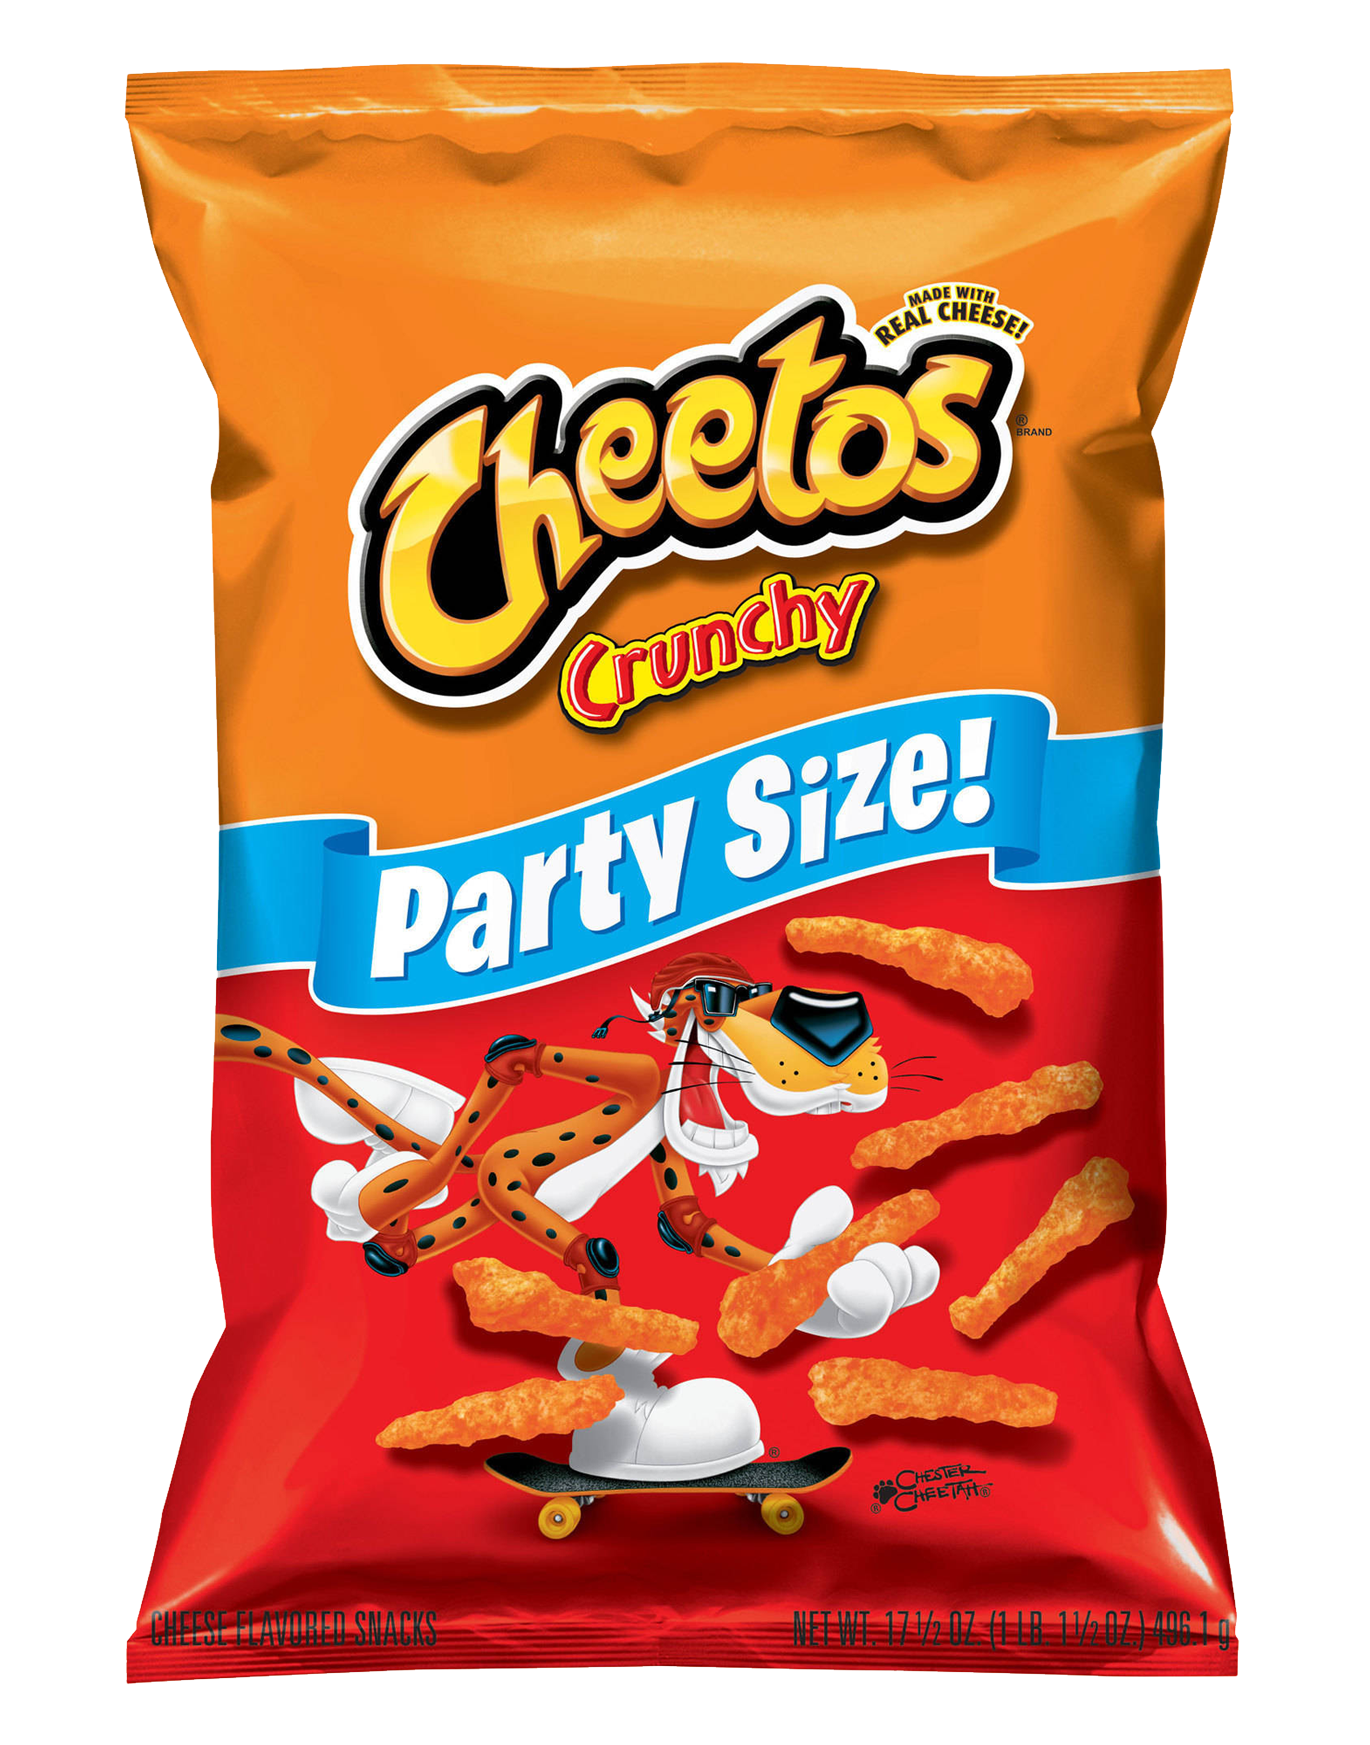 A Bag Of Cheetos